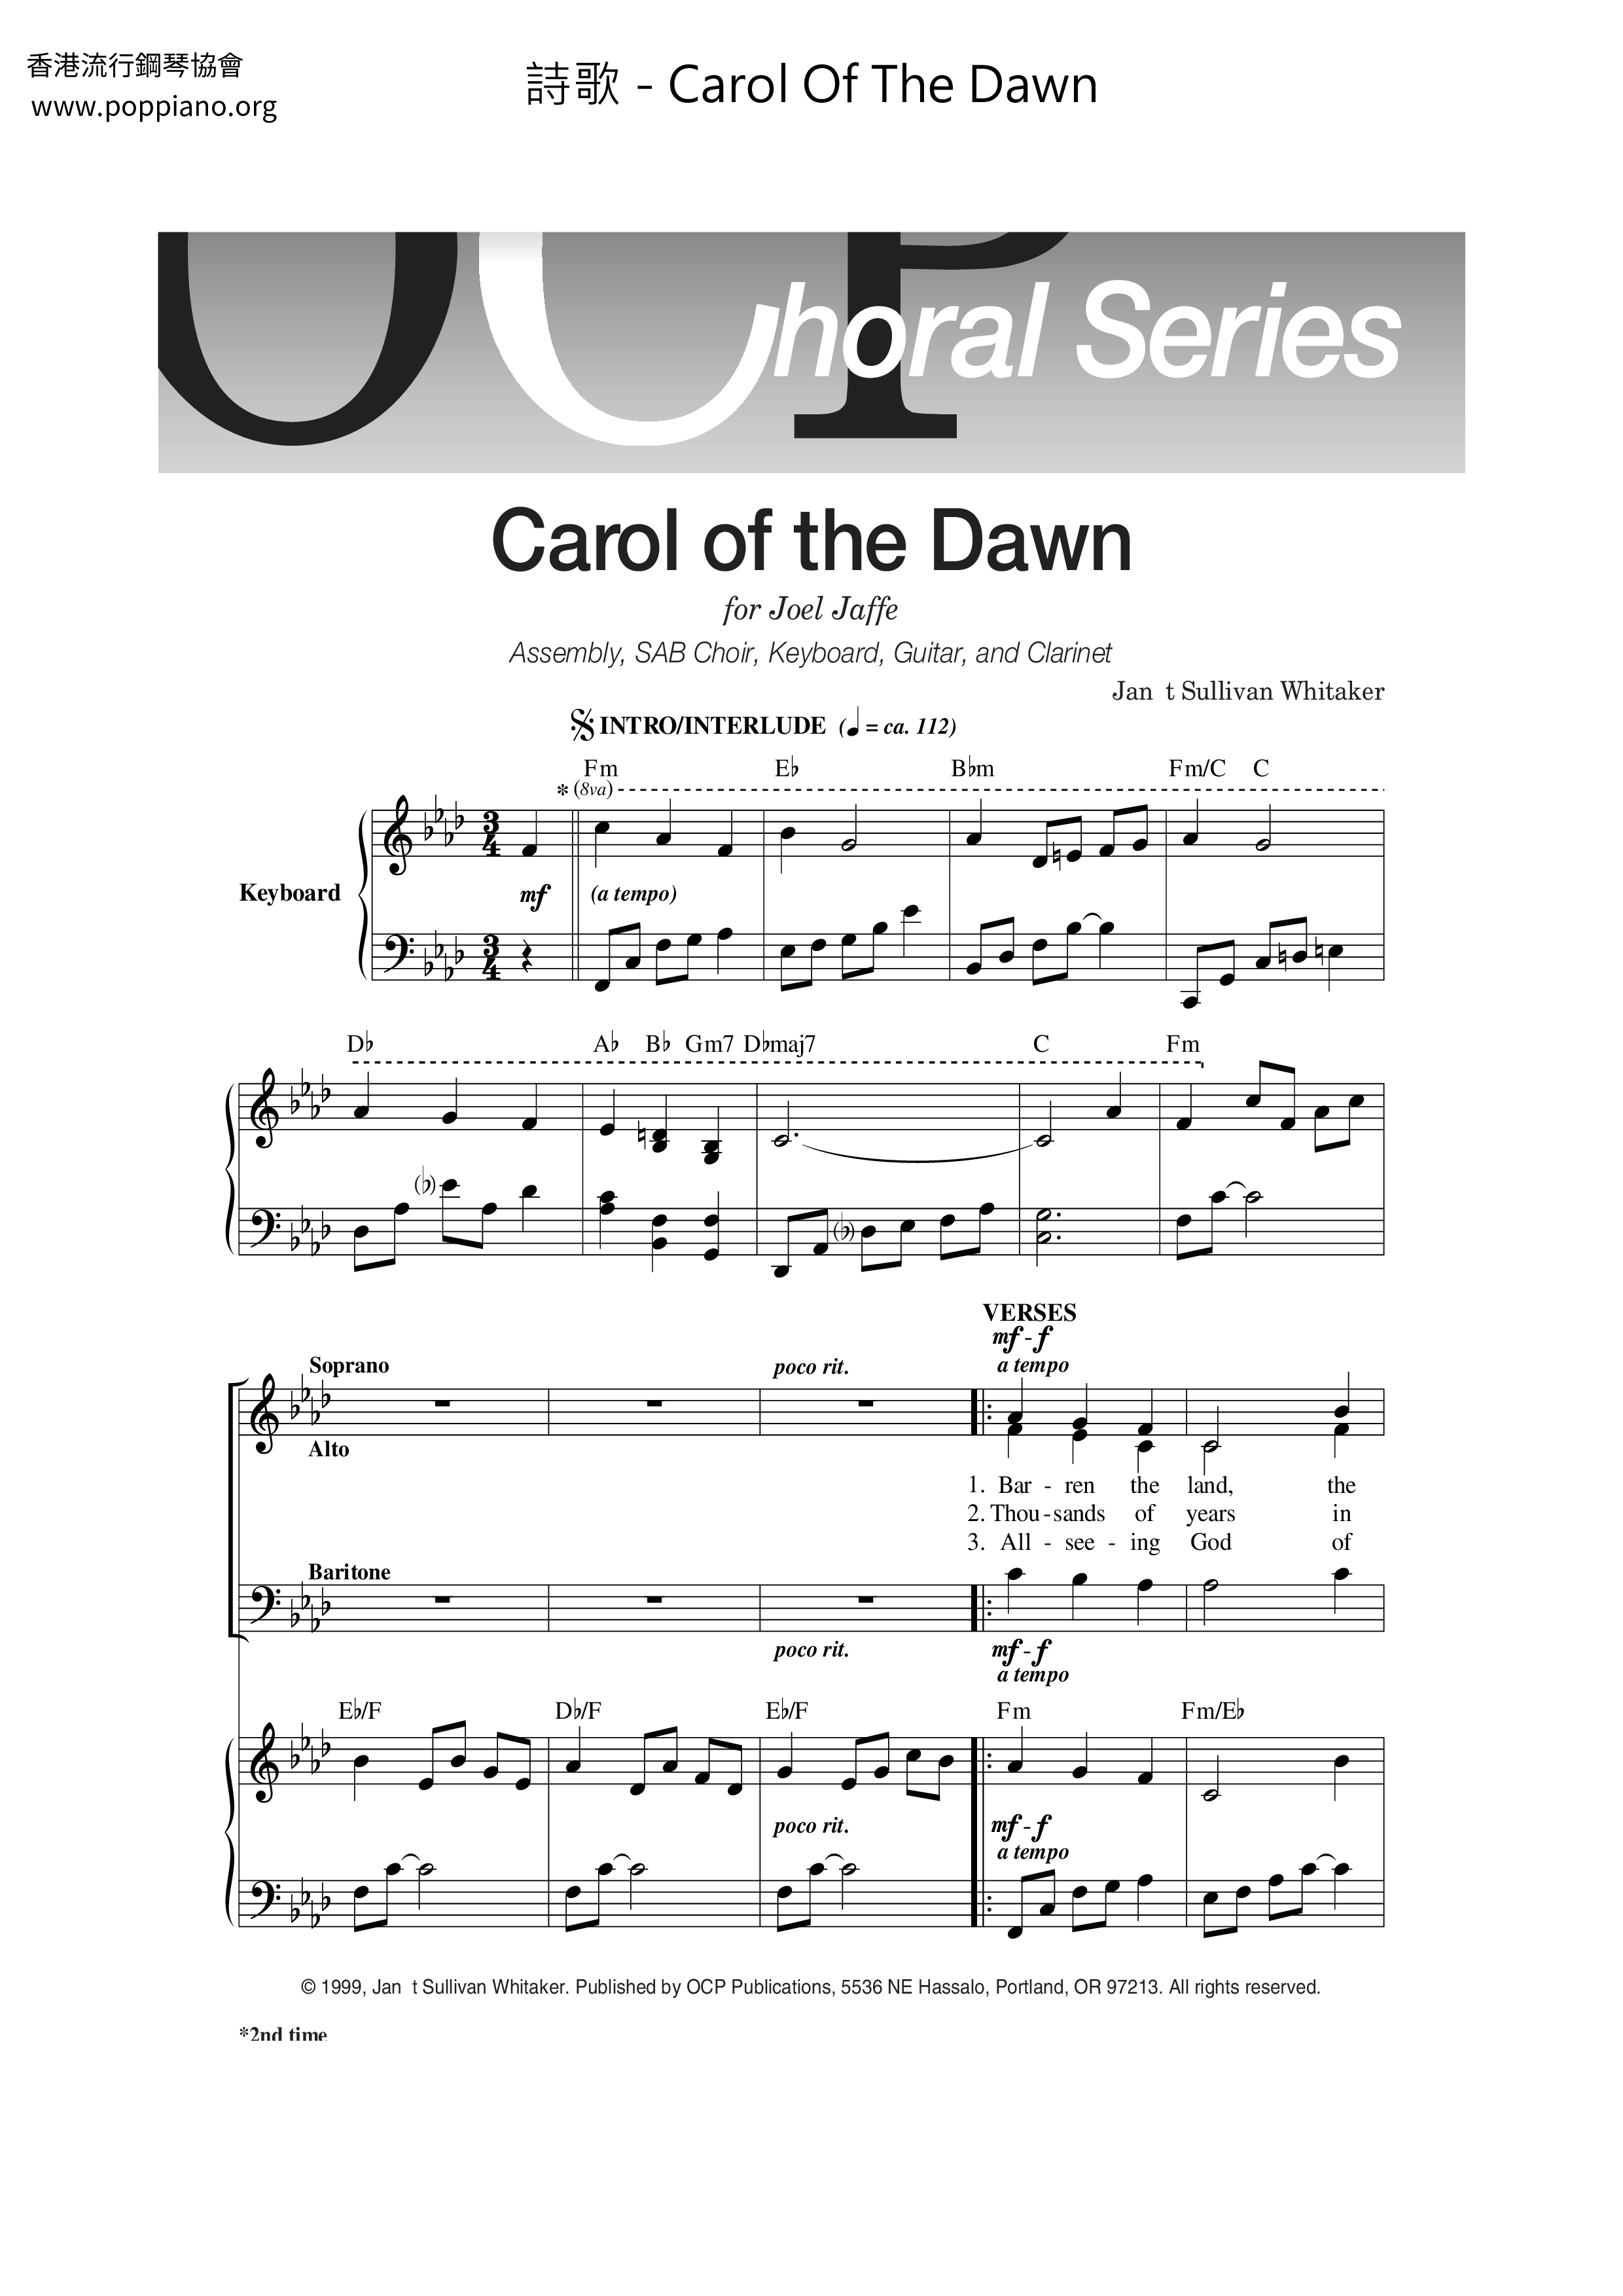 Carol Of The Dawn Score